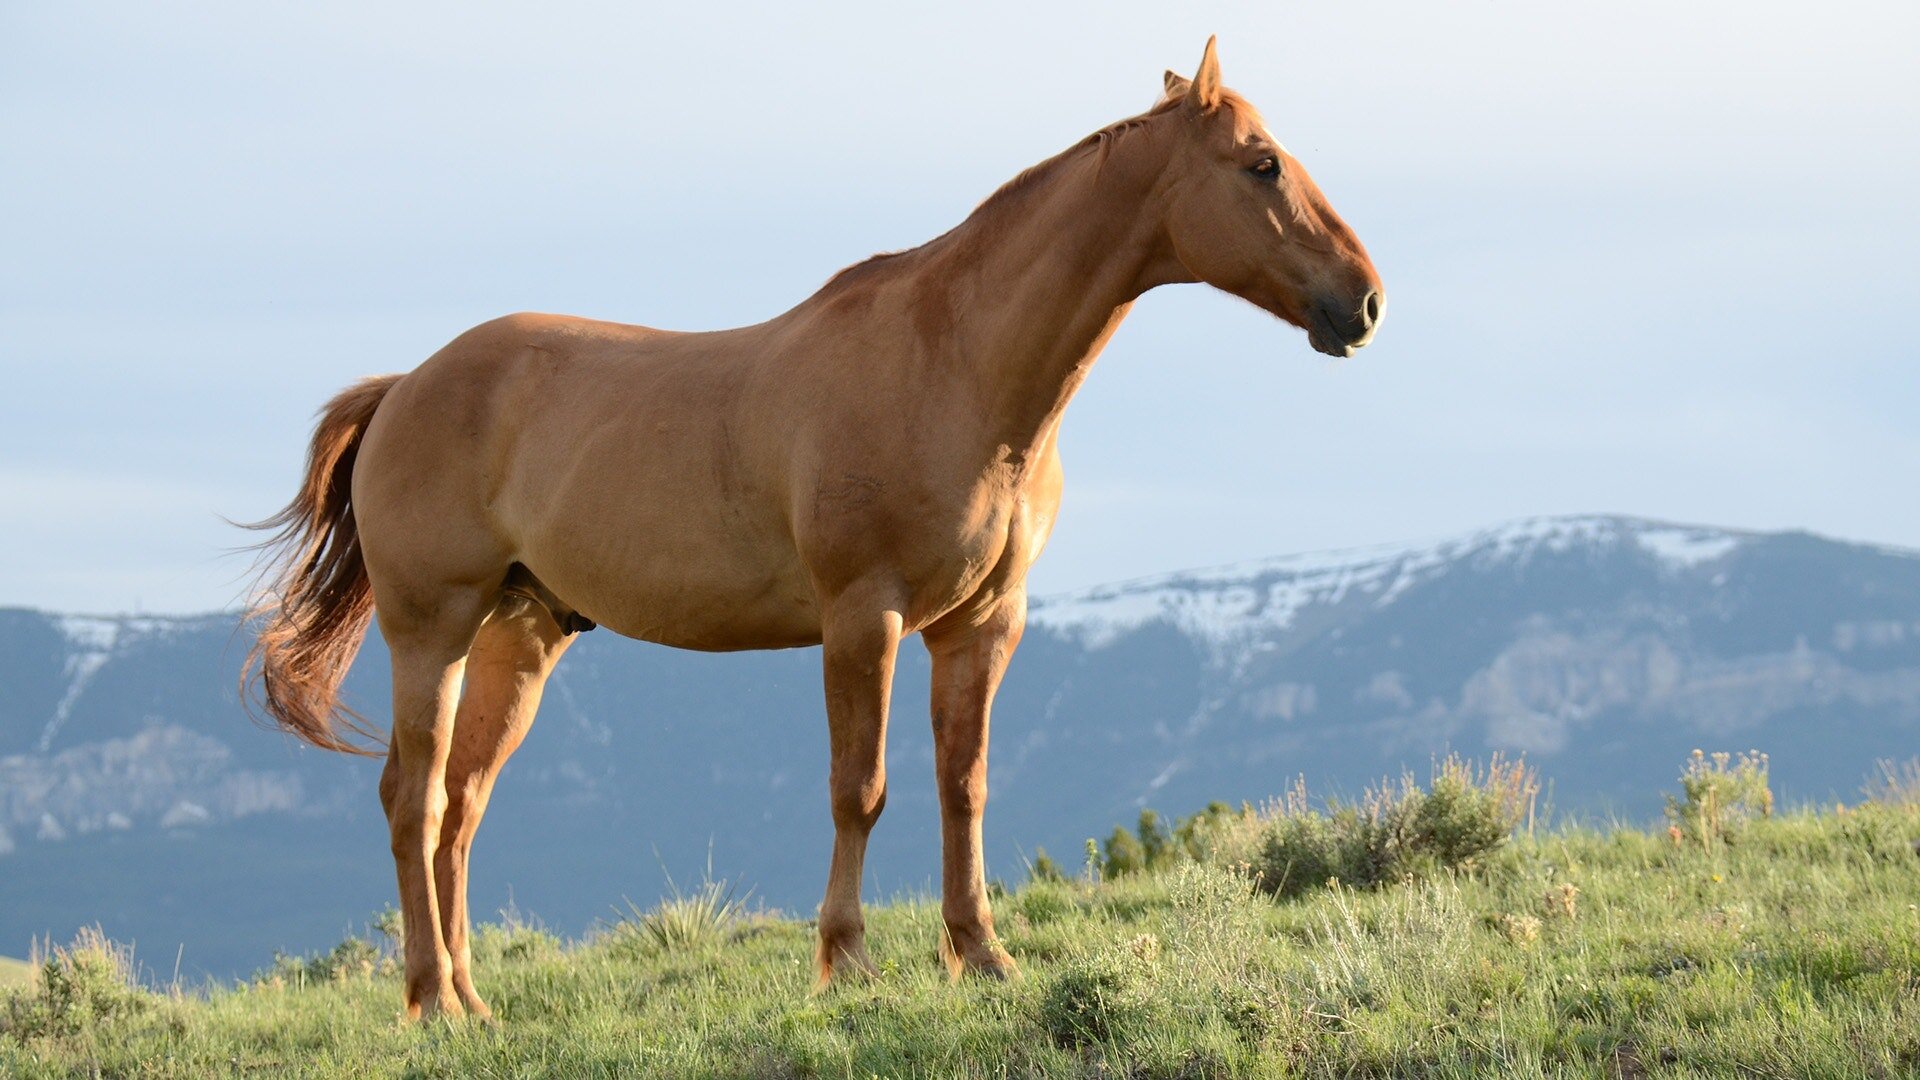 brown-horse-on-grass-field-635499.jpg